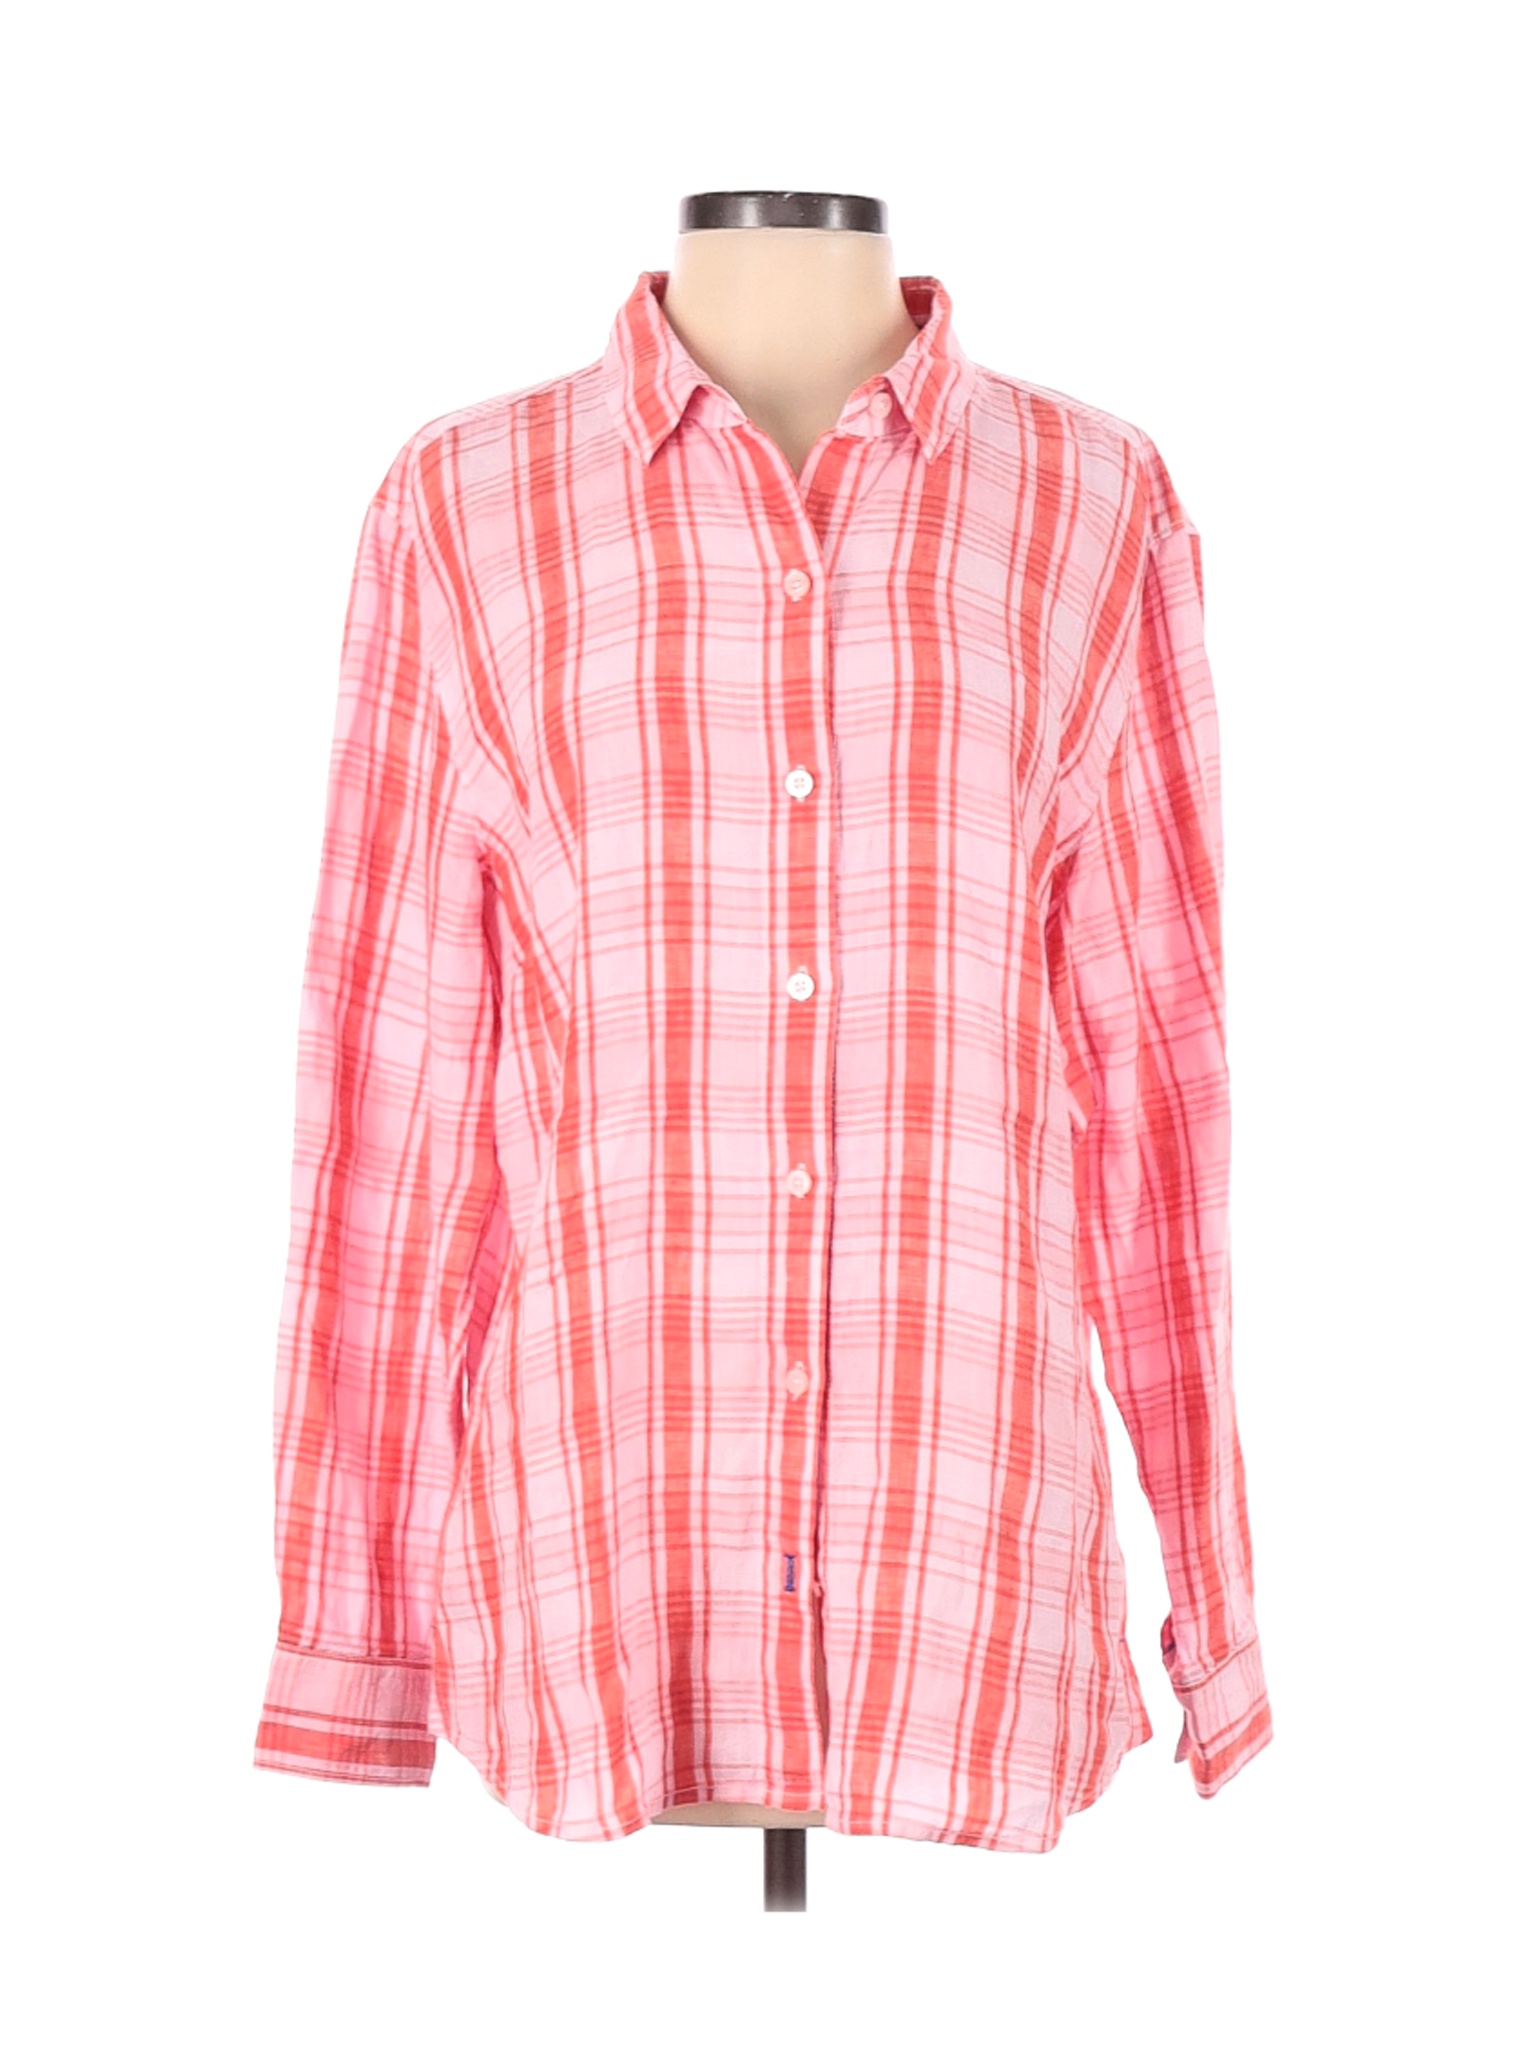 Tommy Bahama Women Pink Long Sleeve Button-Down Shirt L | eBay